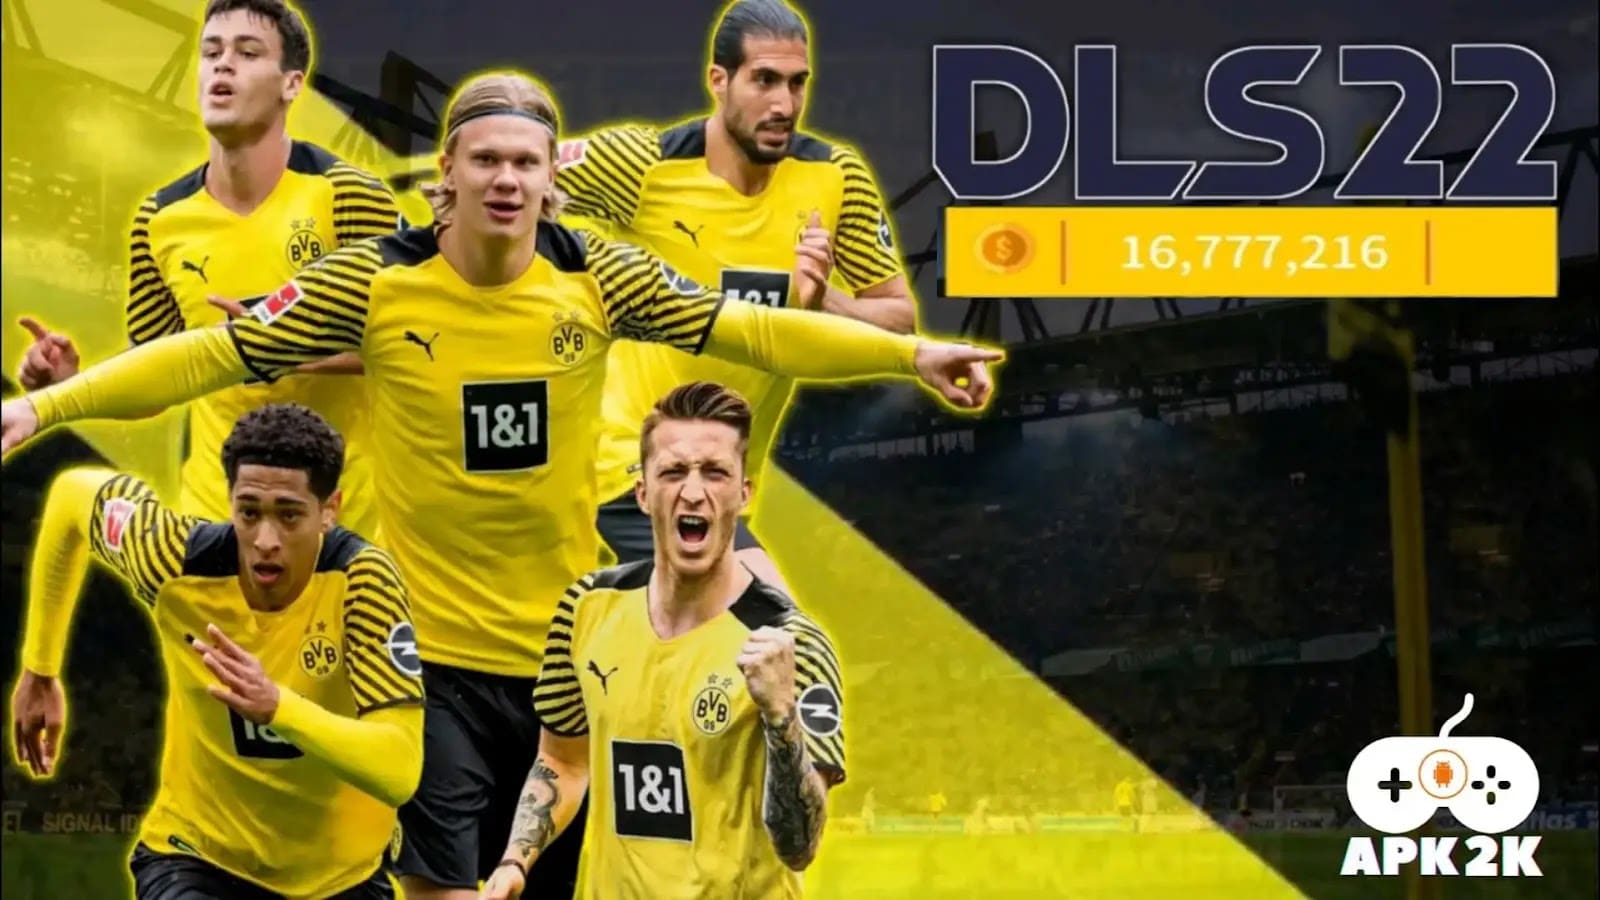 دريم ليغ سوكر 2022 مود فريق بروسيا دورتموند Dortmund بدون انترنت للاندرويد